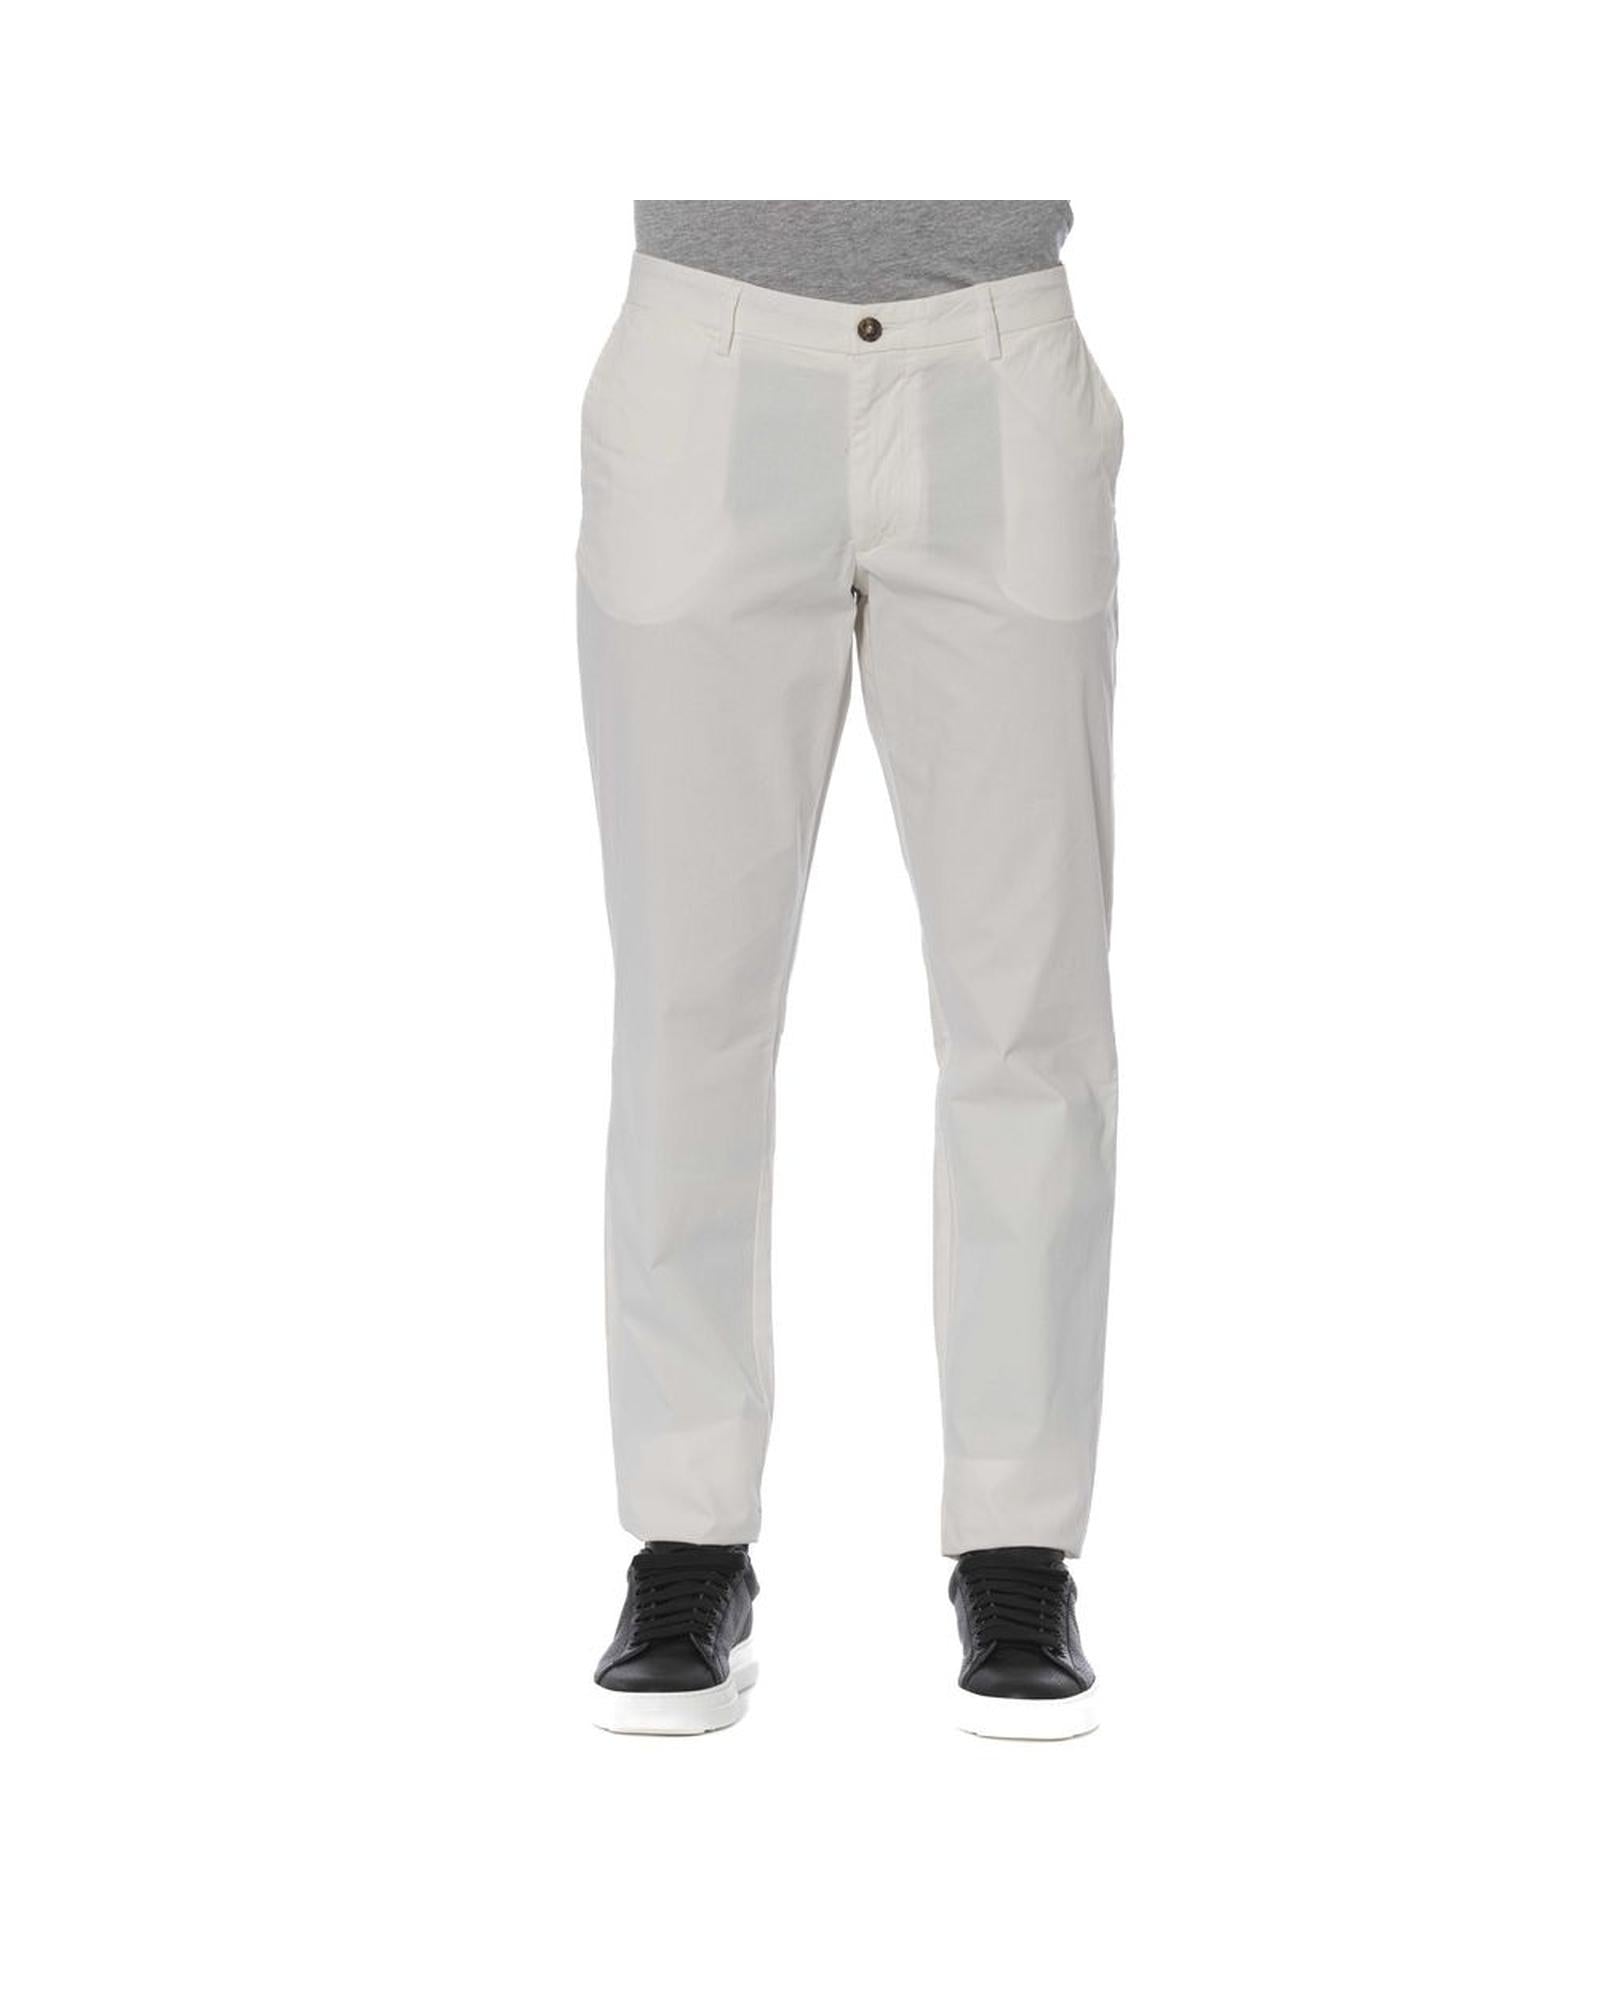 Men's White Cotton Jeans & Pant - W50 US